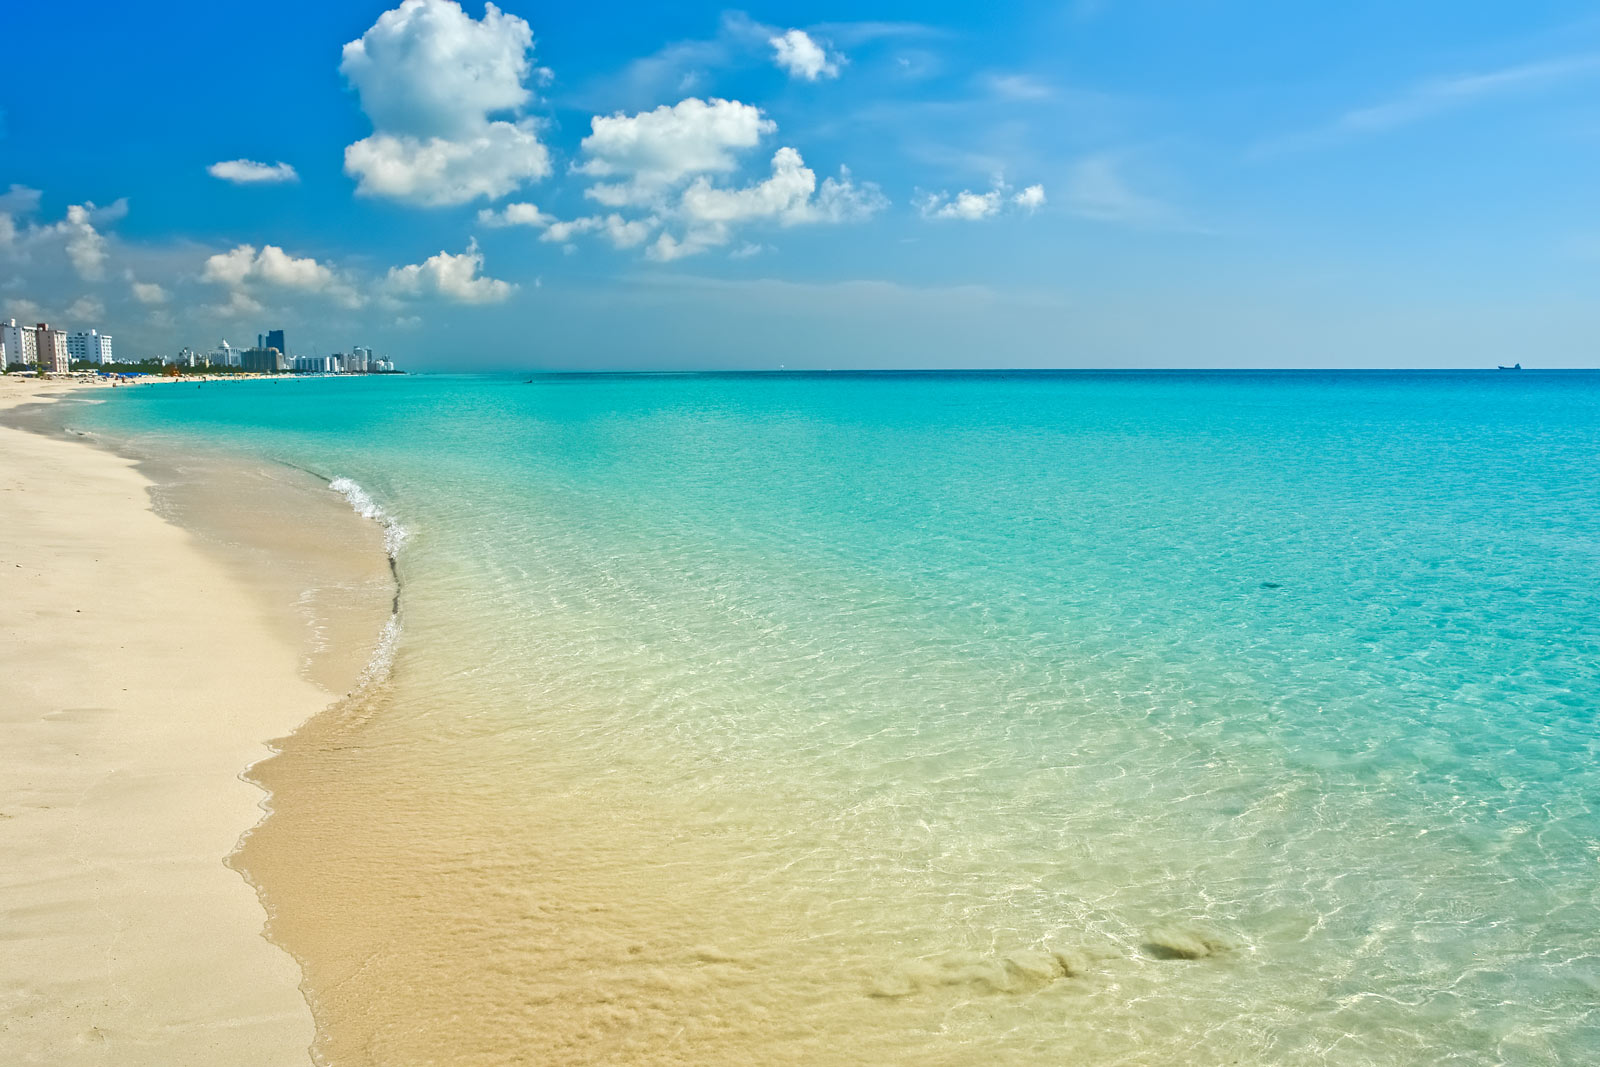 best beaches in florida - South Beach in Miami Florida